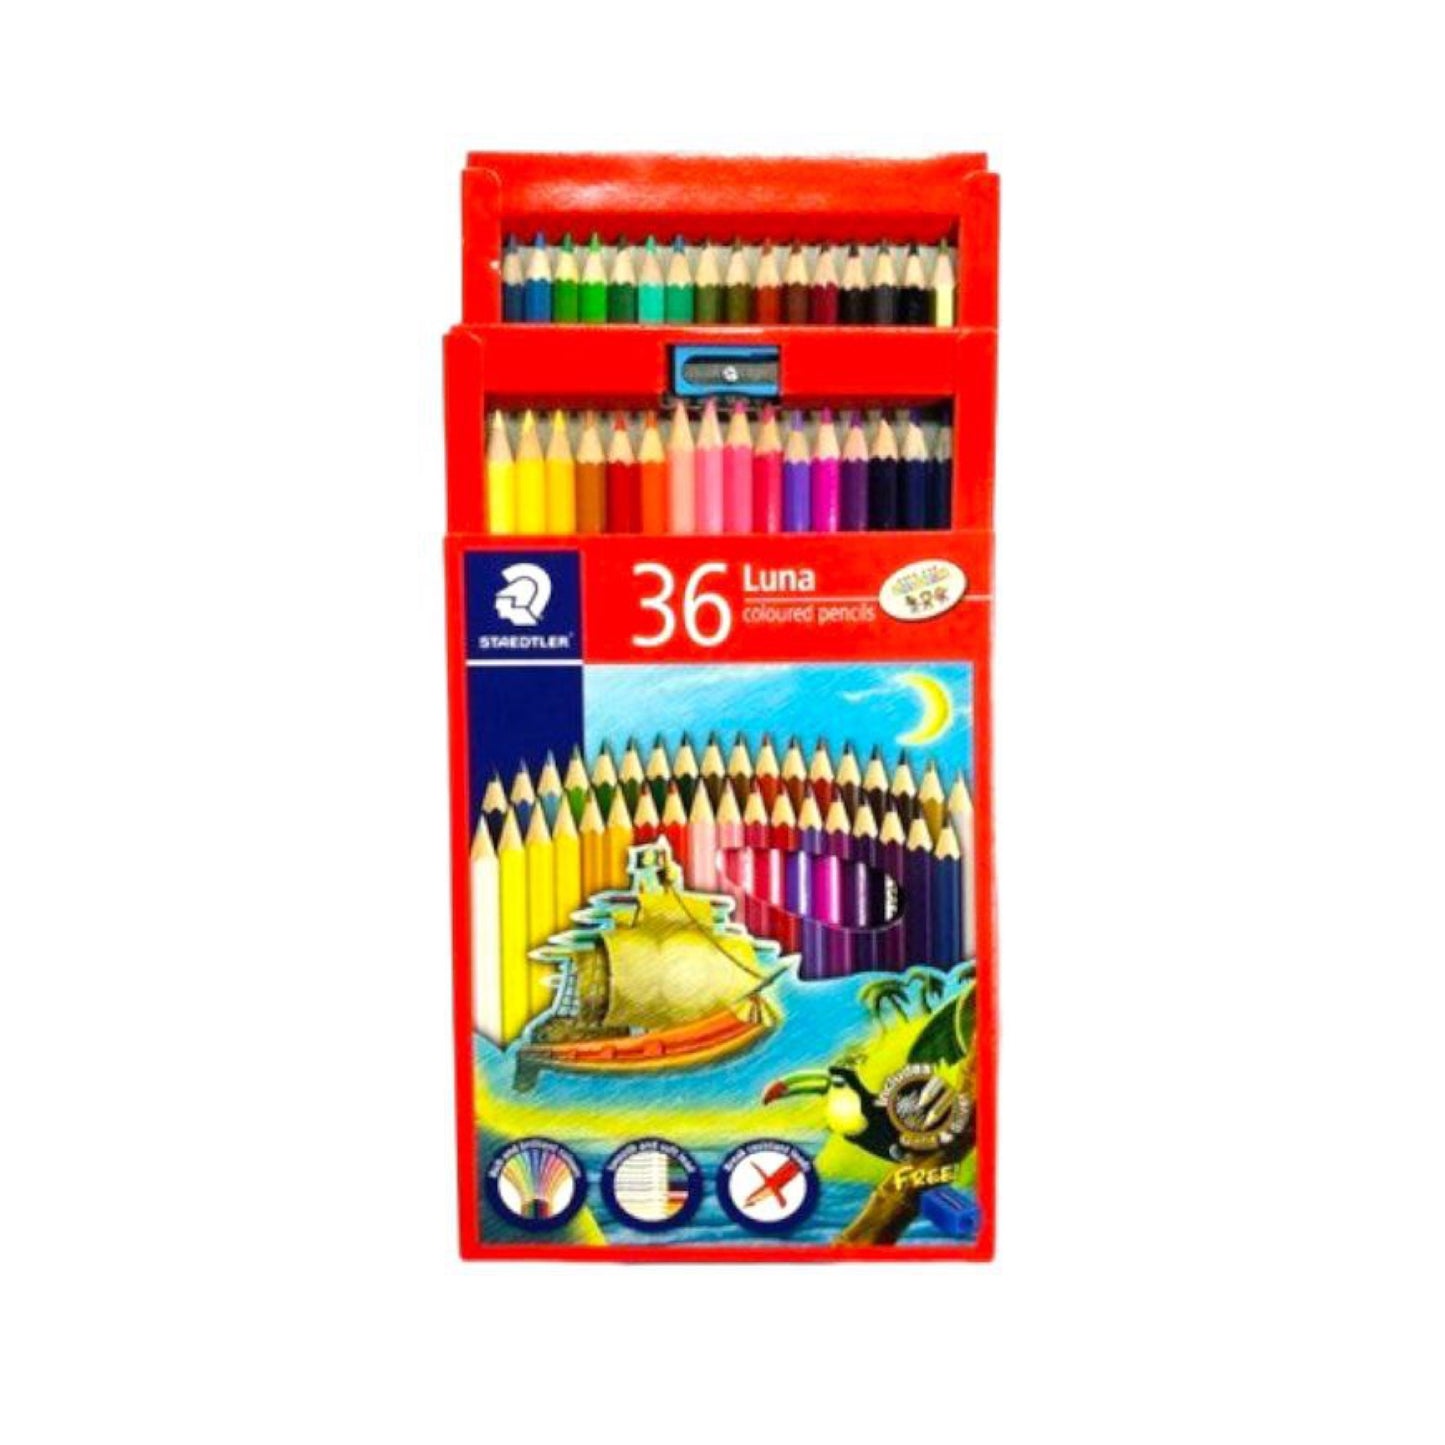 Staedtler Luna colored pencils 36 Colors || الوان خشبية ستدلر علبة كرتون الاصدار الاحمر 36 لون⁩